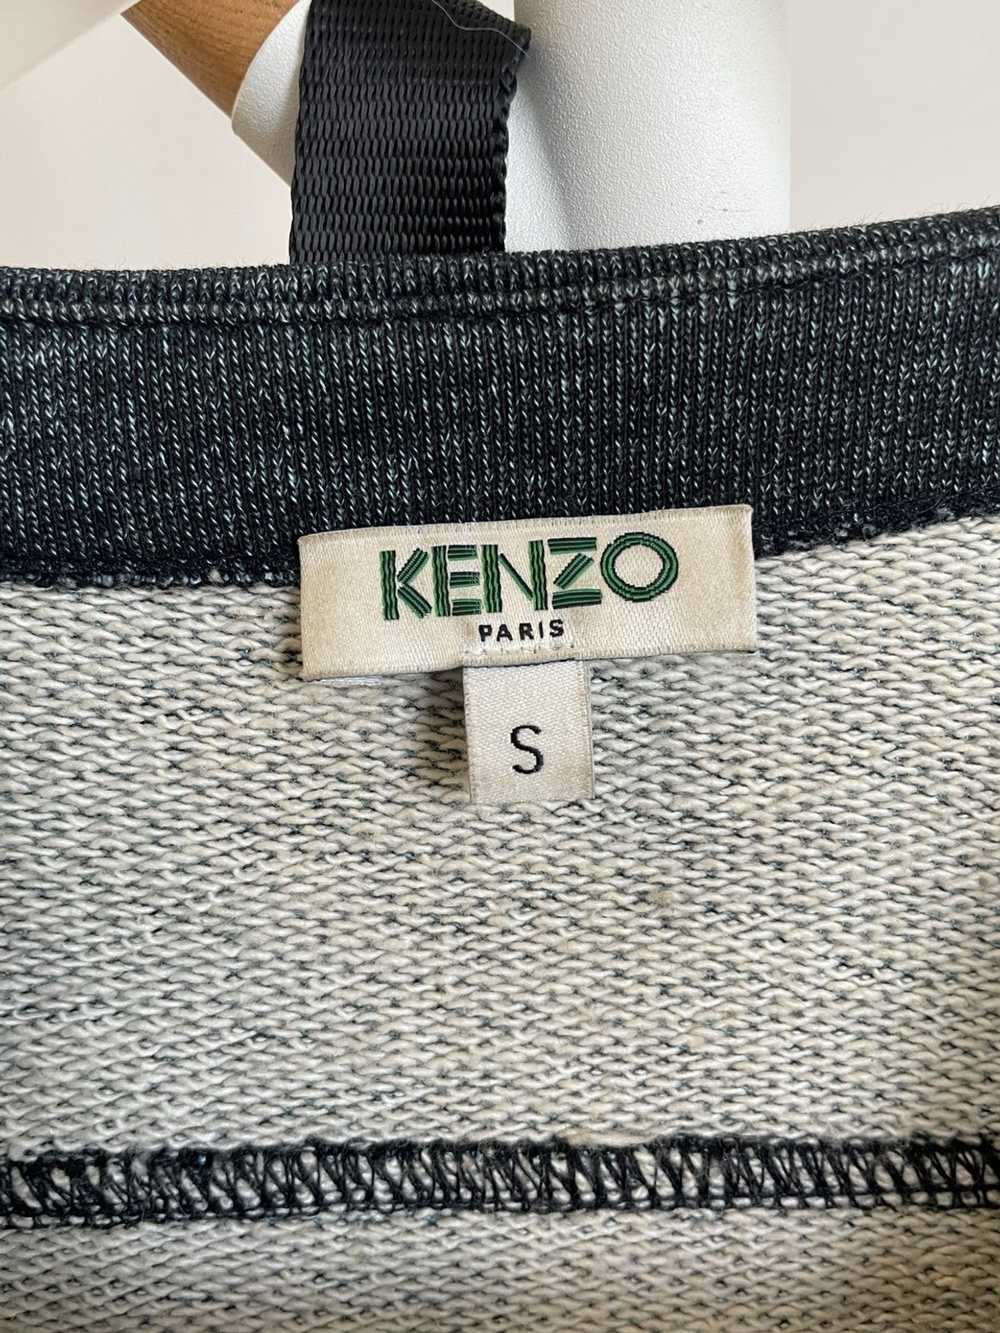 Kenzo Kenzo embroidery knit cropped light jacket - image 3